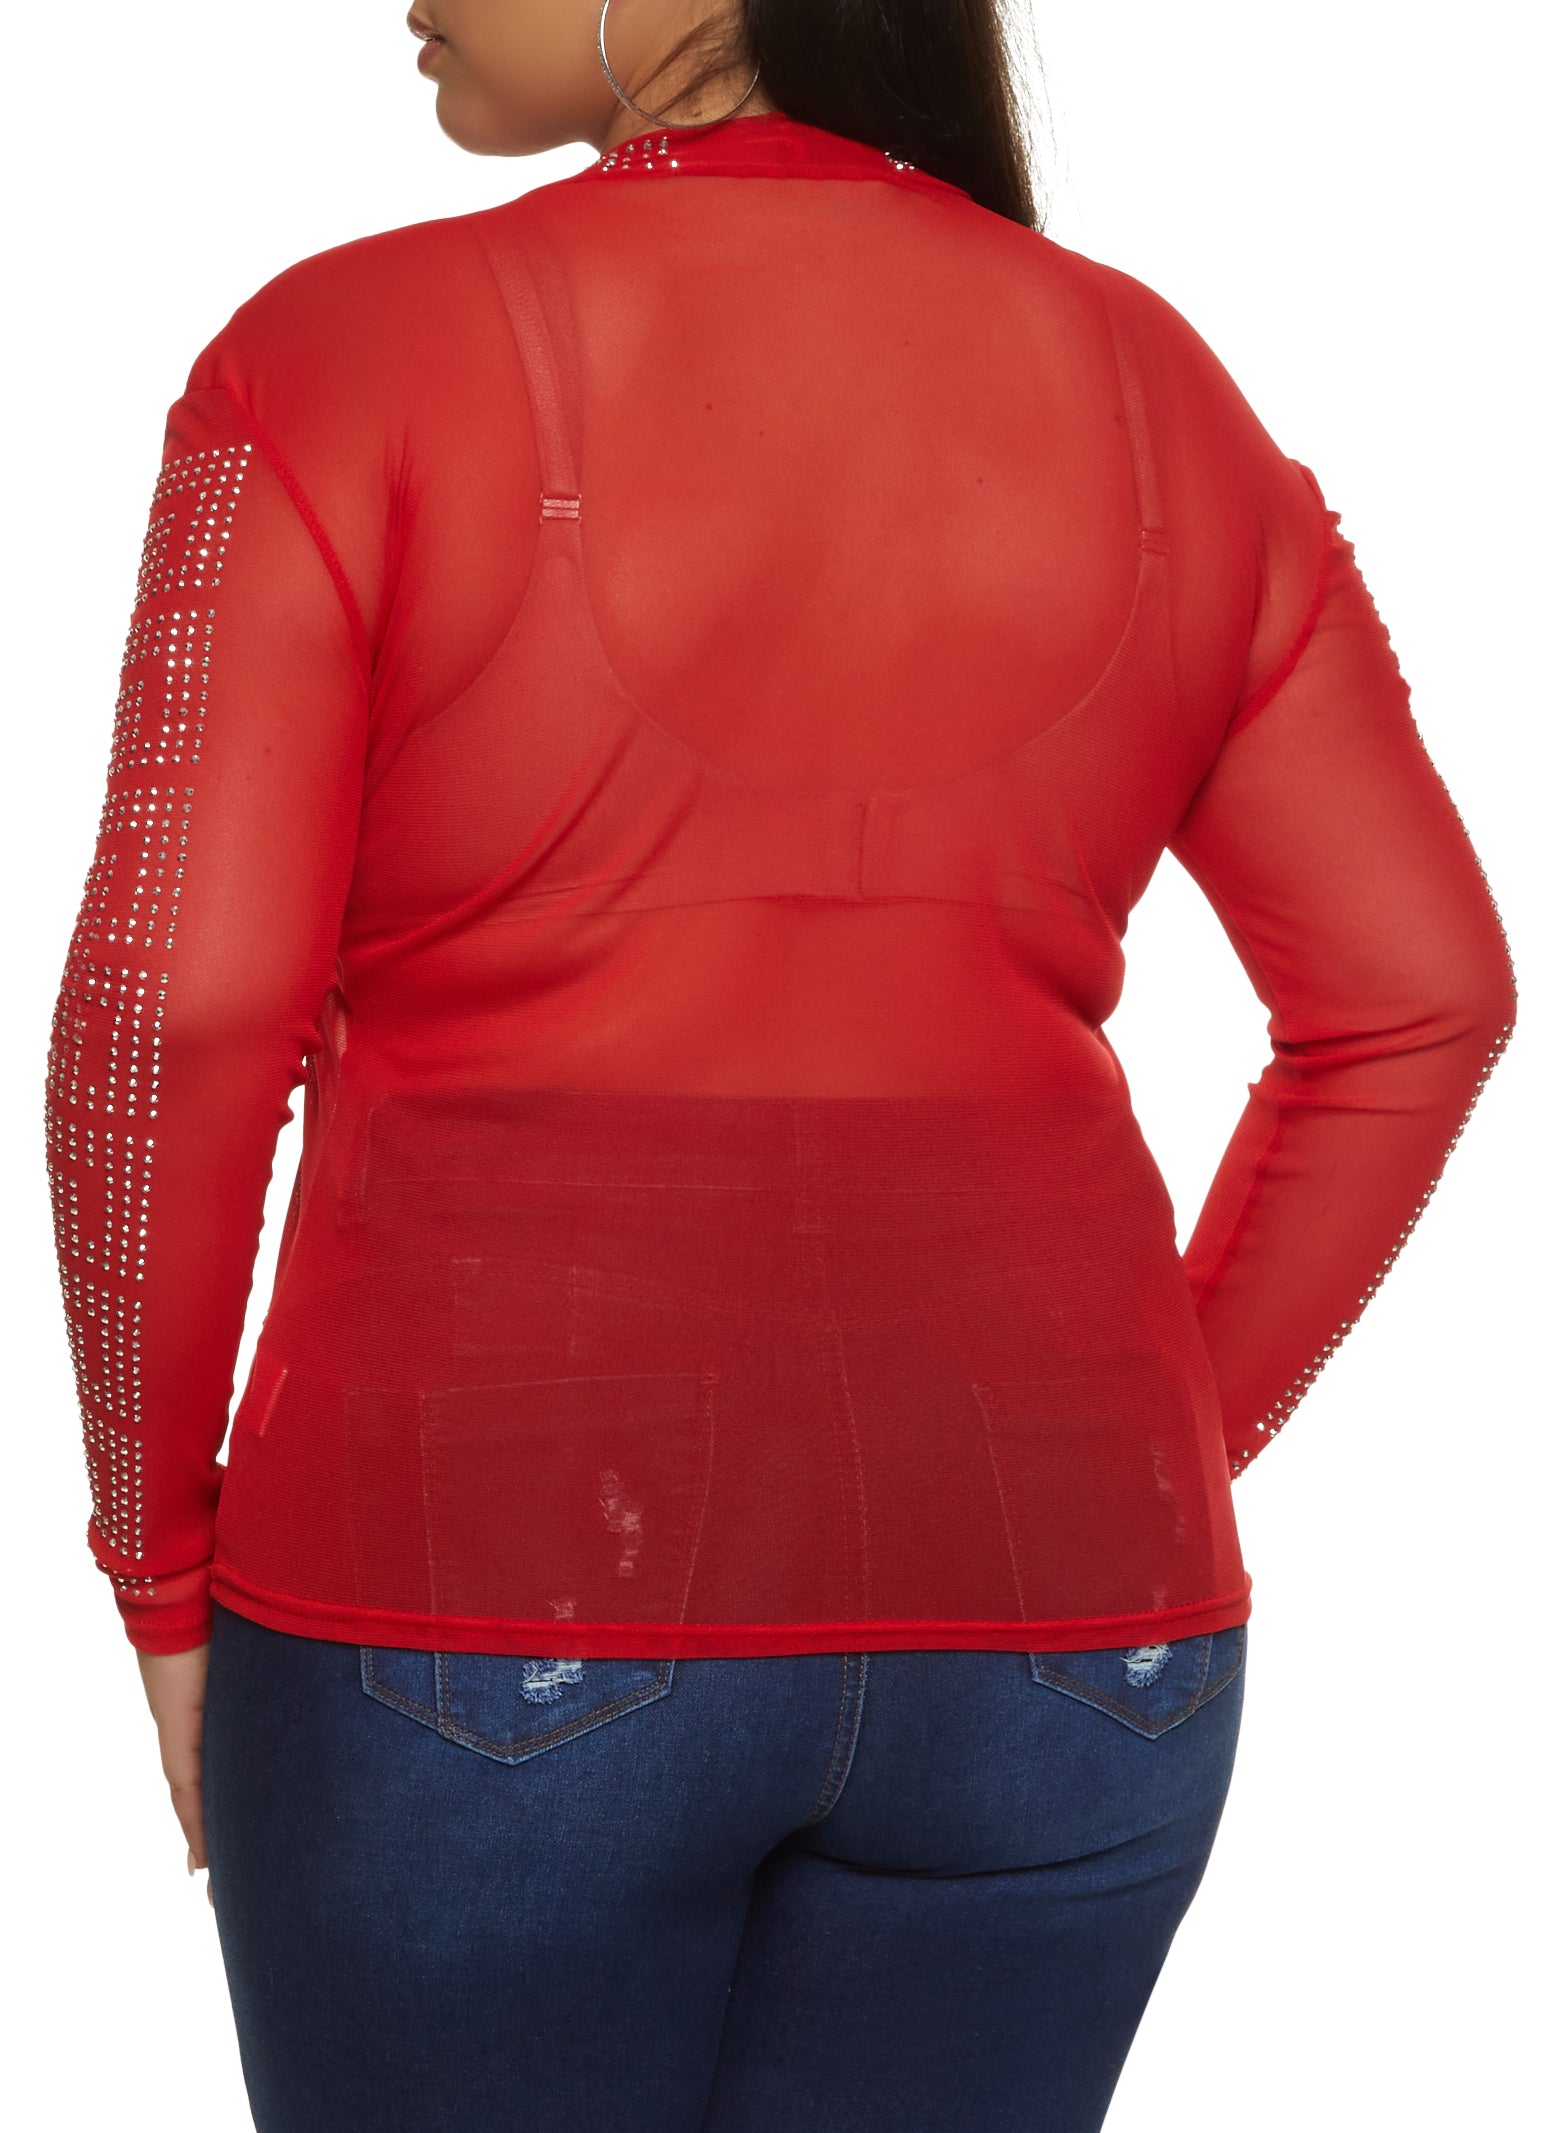 Rainbow Shops Womens Plus Size Seamless Mock Neck Keyhole Bodysuit, Red,  Size 2X-3X